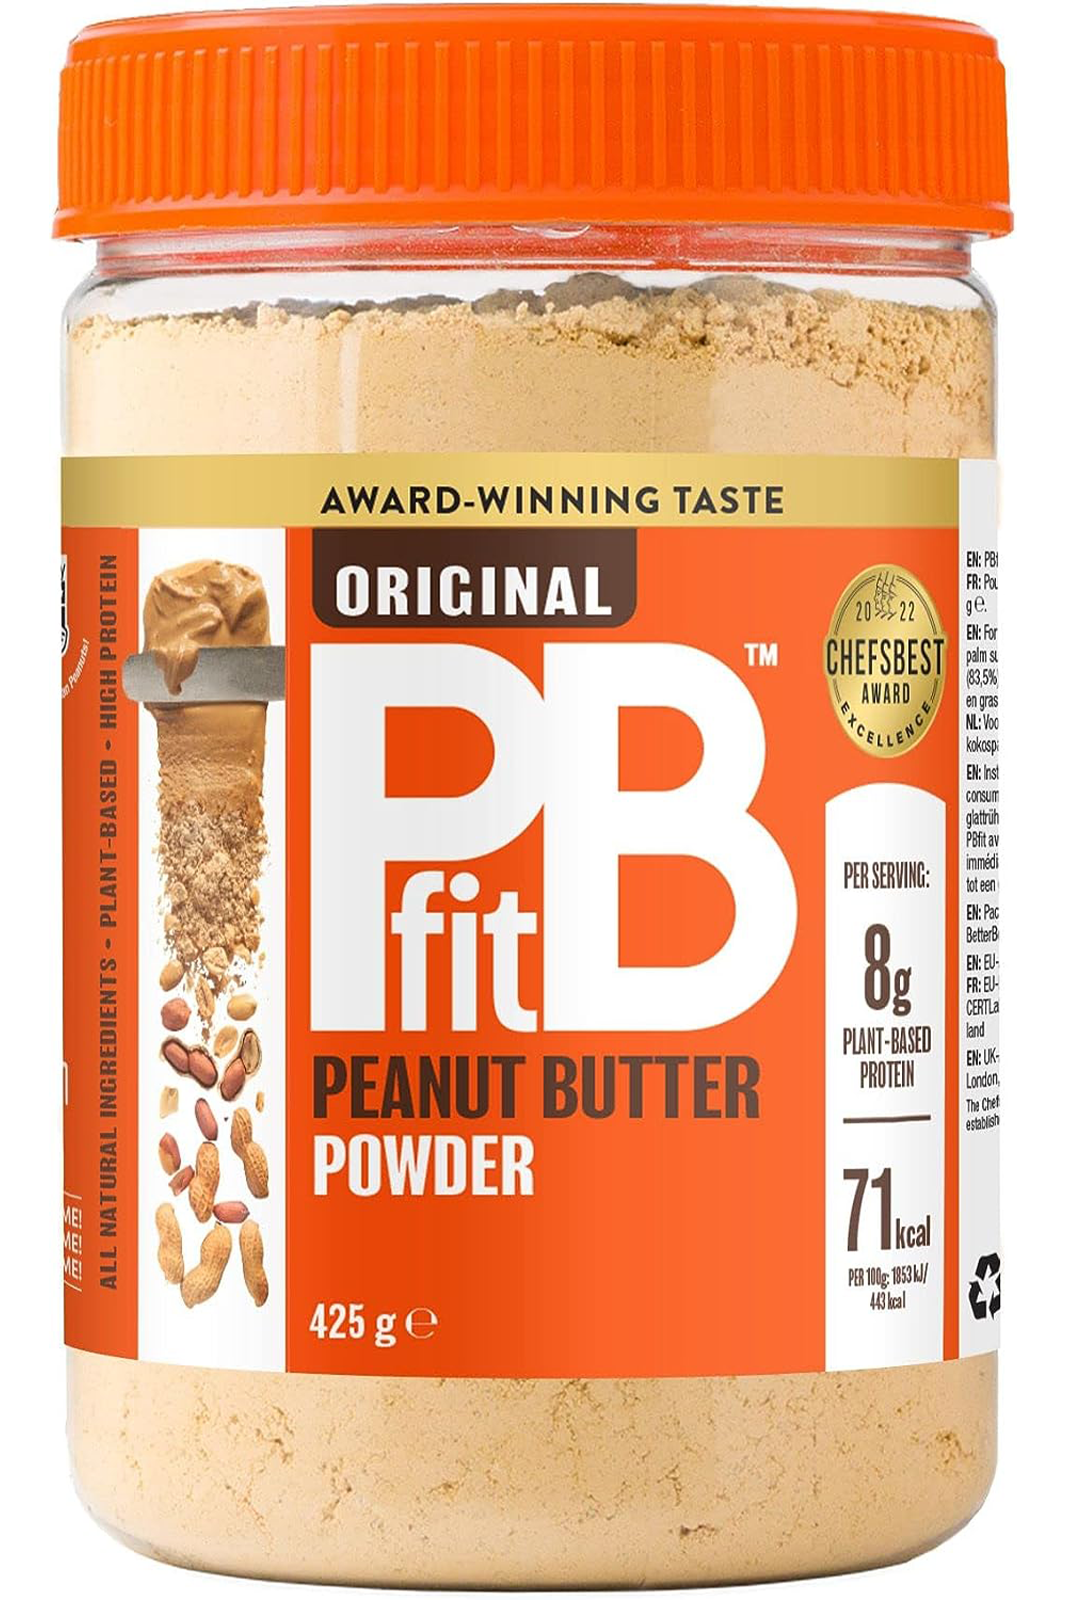 Peanut Butter Powder 425g Pbfit Healthy Supplies